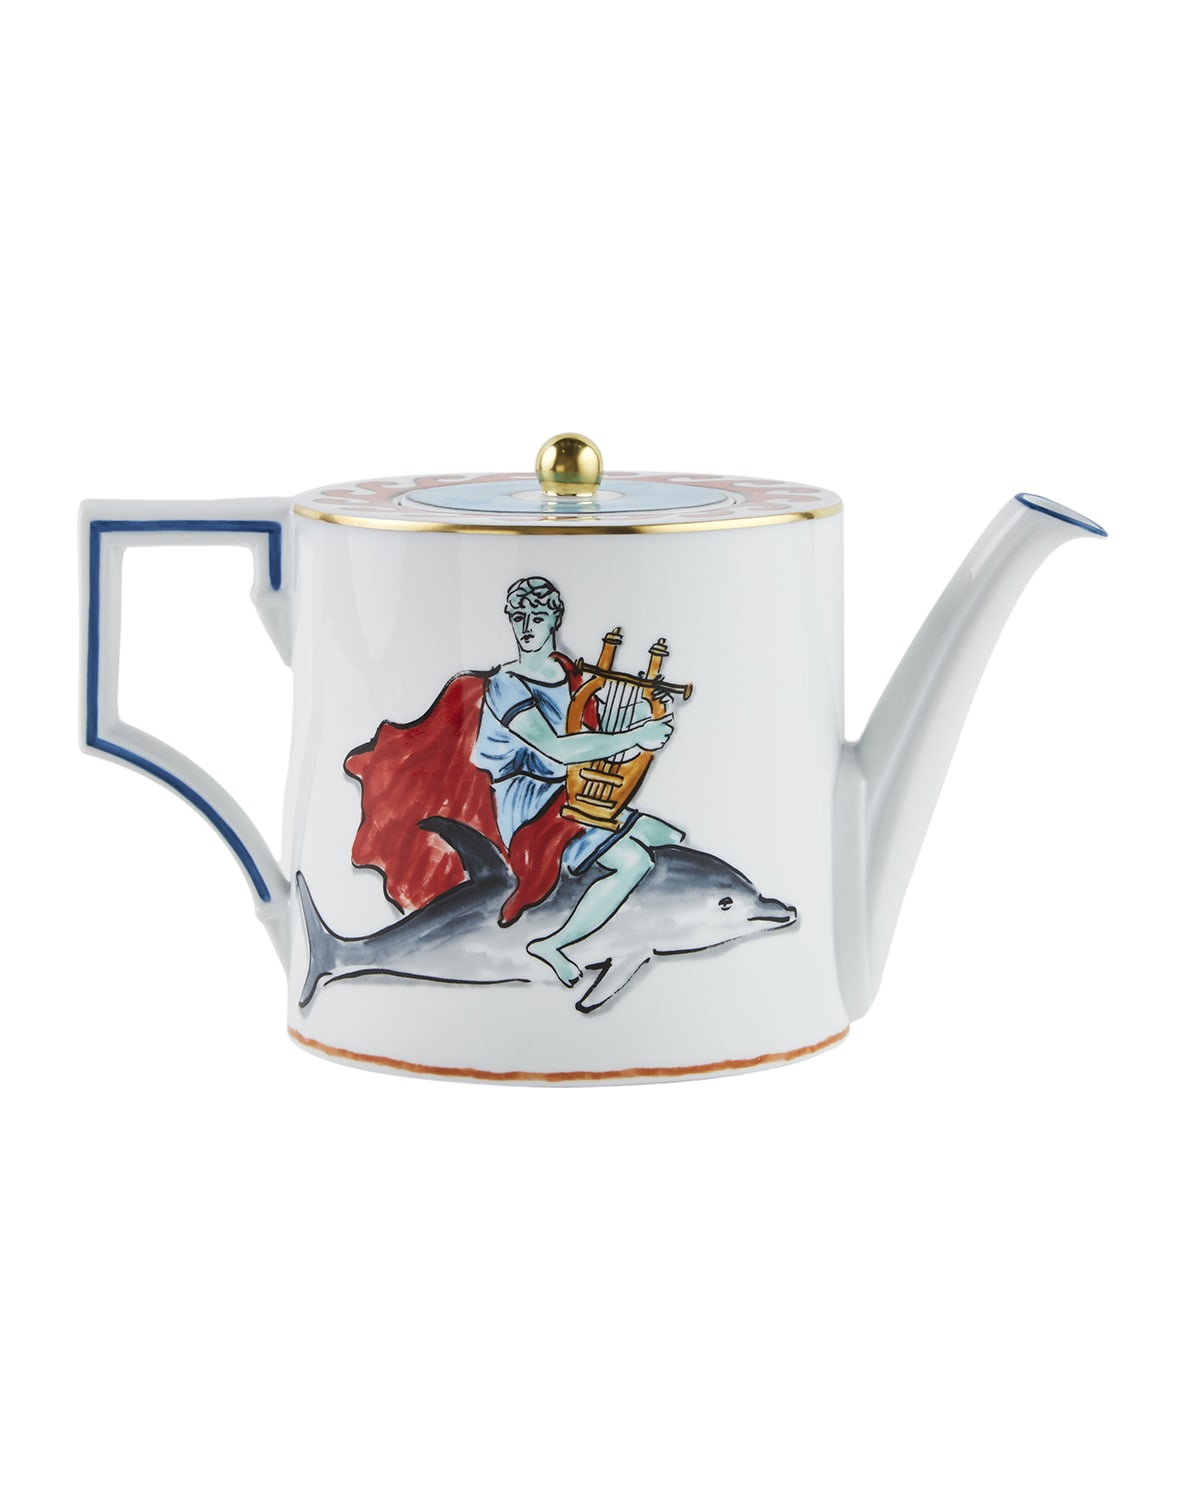 Ginori 1735 Neptune's Voyage Teapot, White